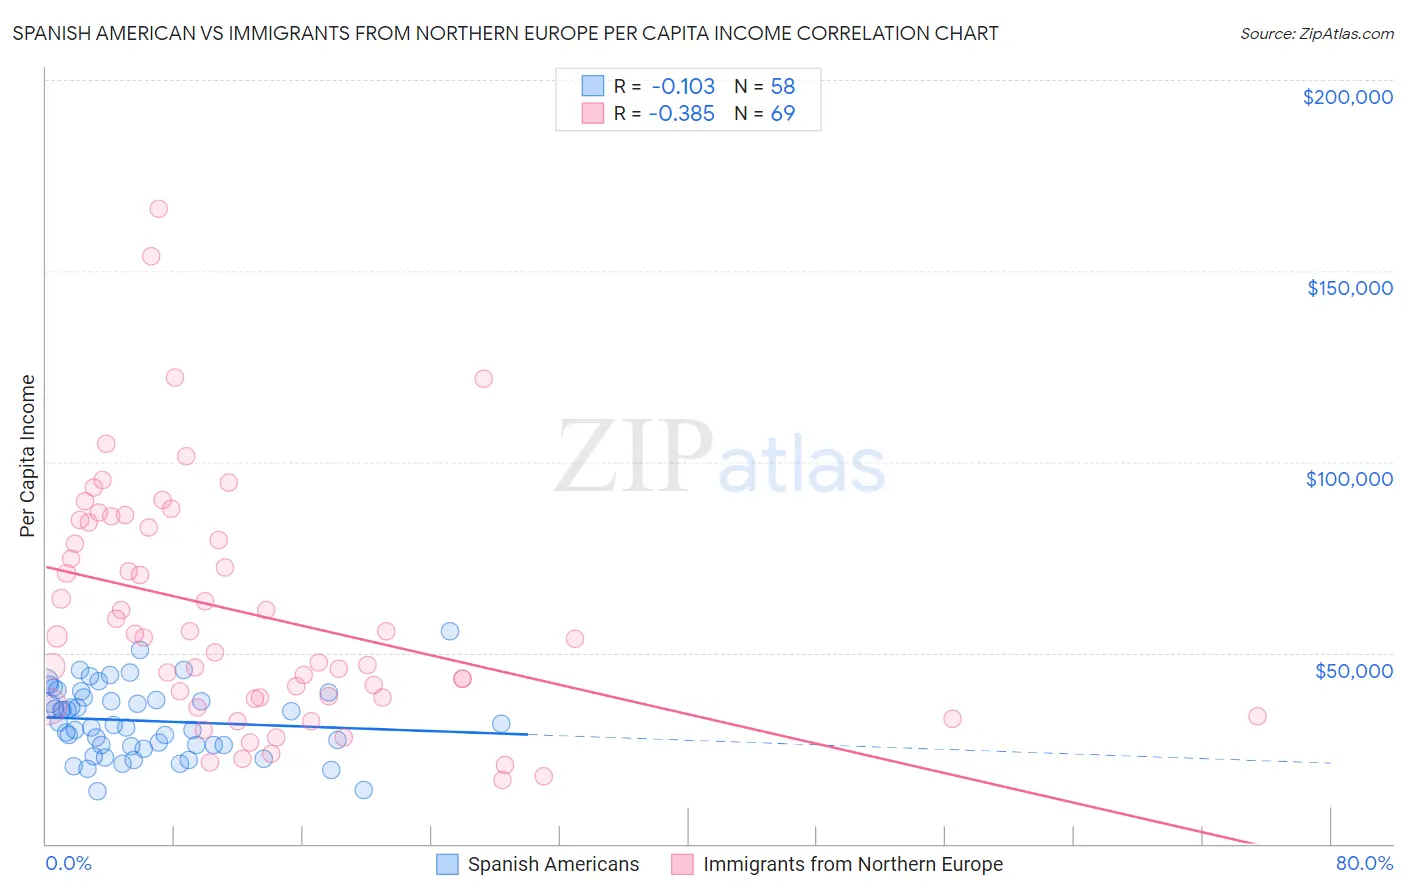 Spanish American vs Immigrants from Northern Europe Per Capita Income